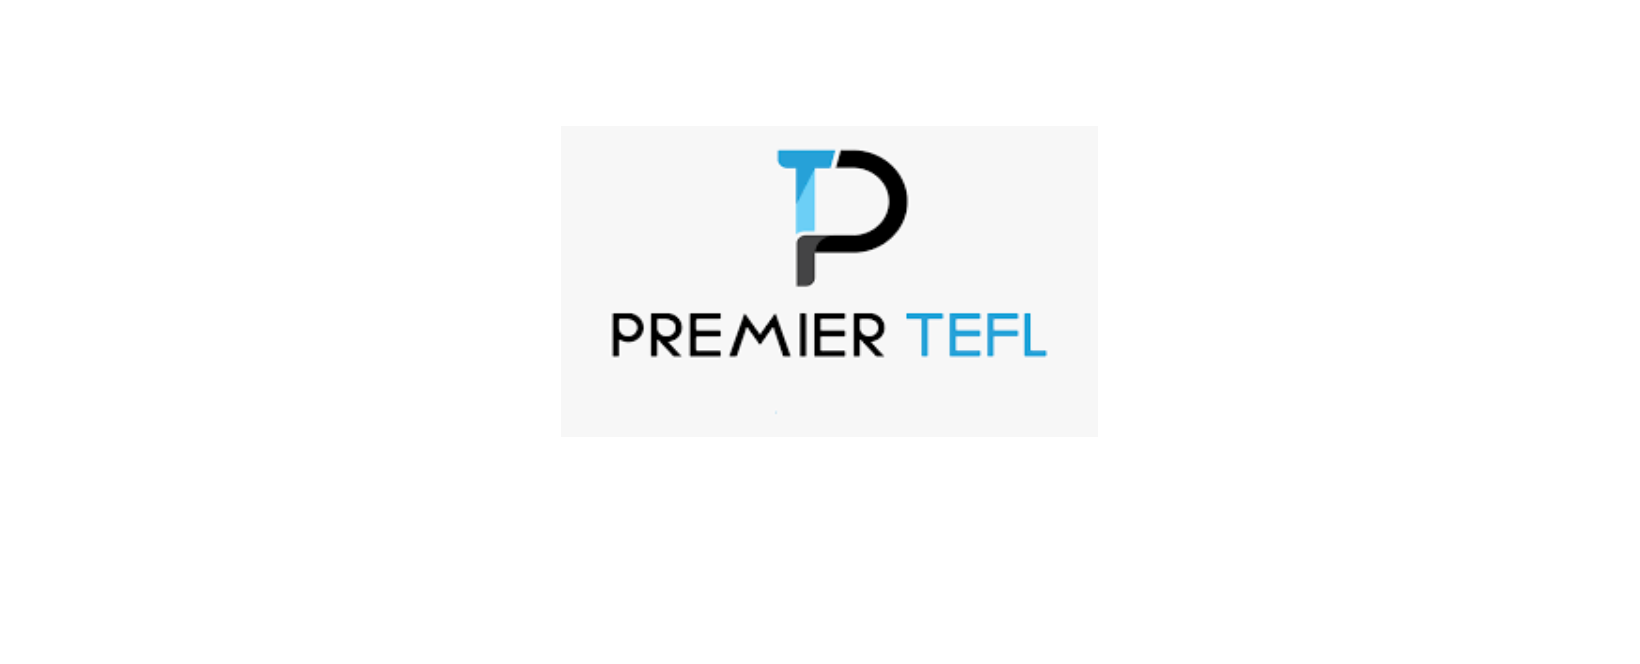 Premier TEFL Discount Code 2022